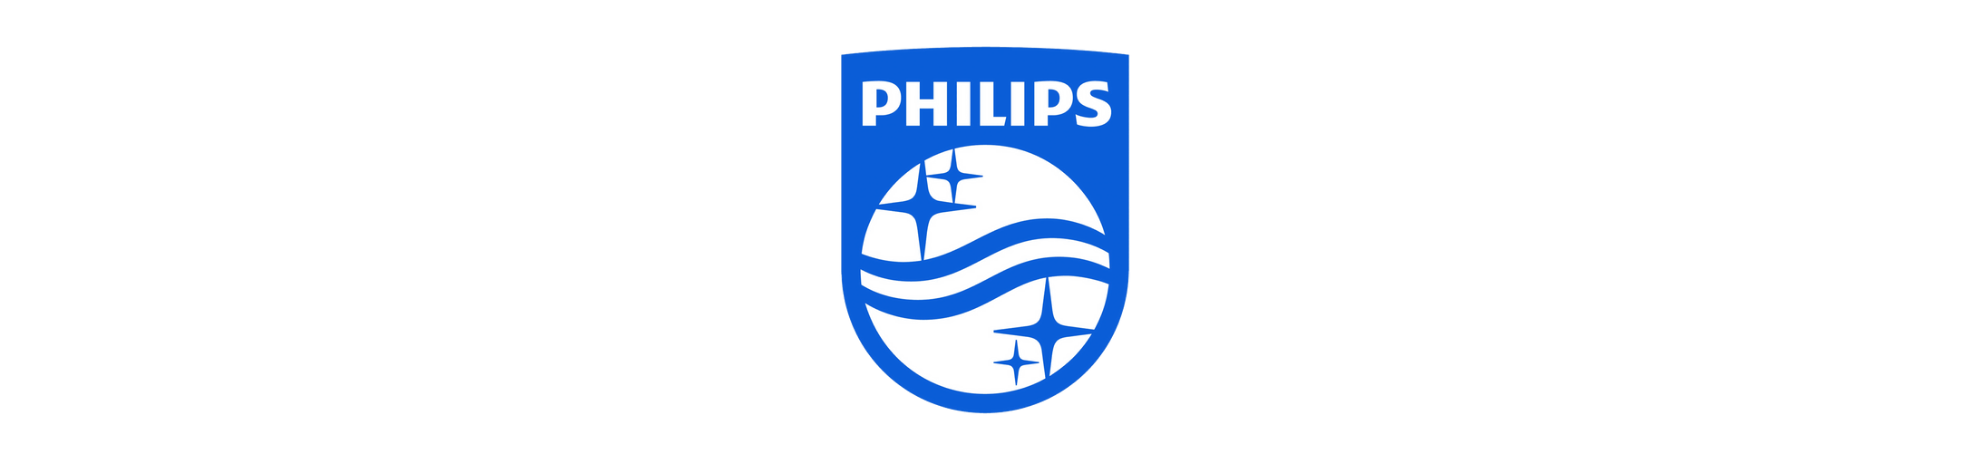 Philips smart products| موقع حلول متقدمة للعدد